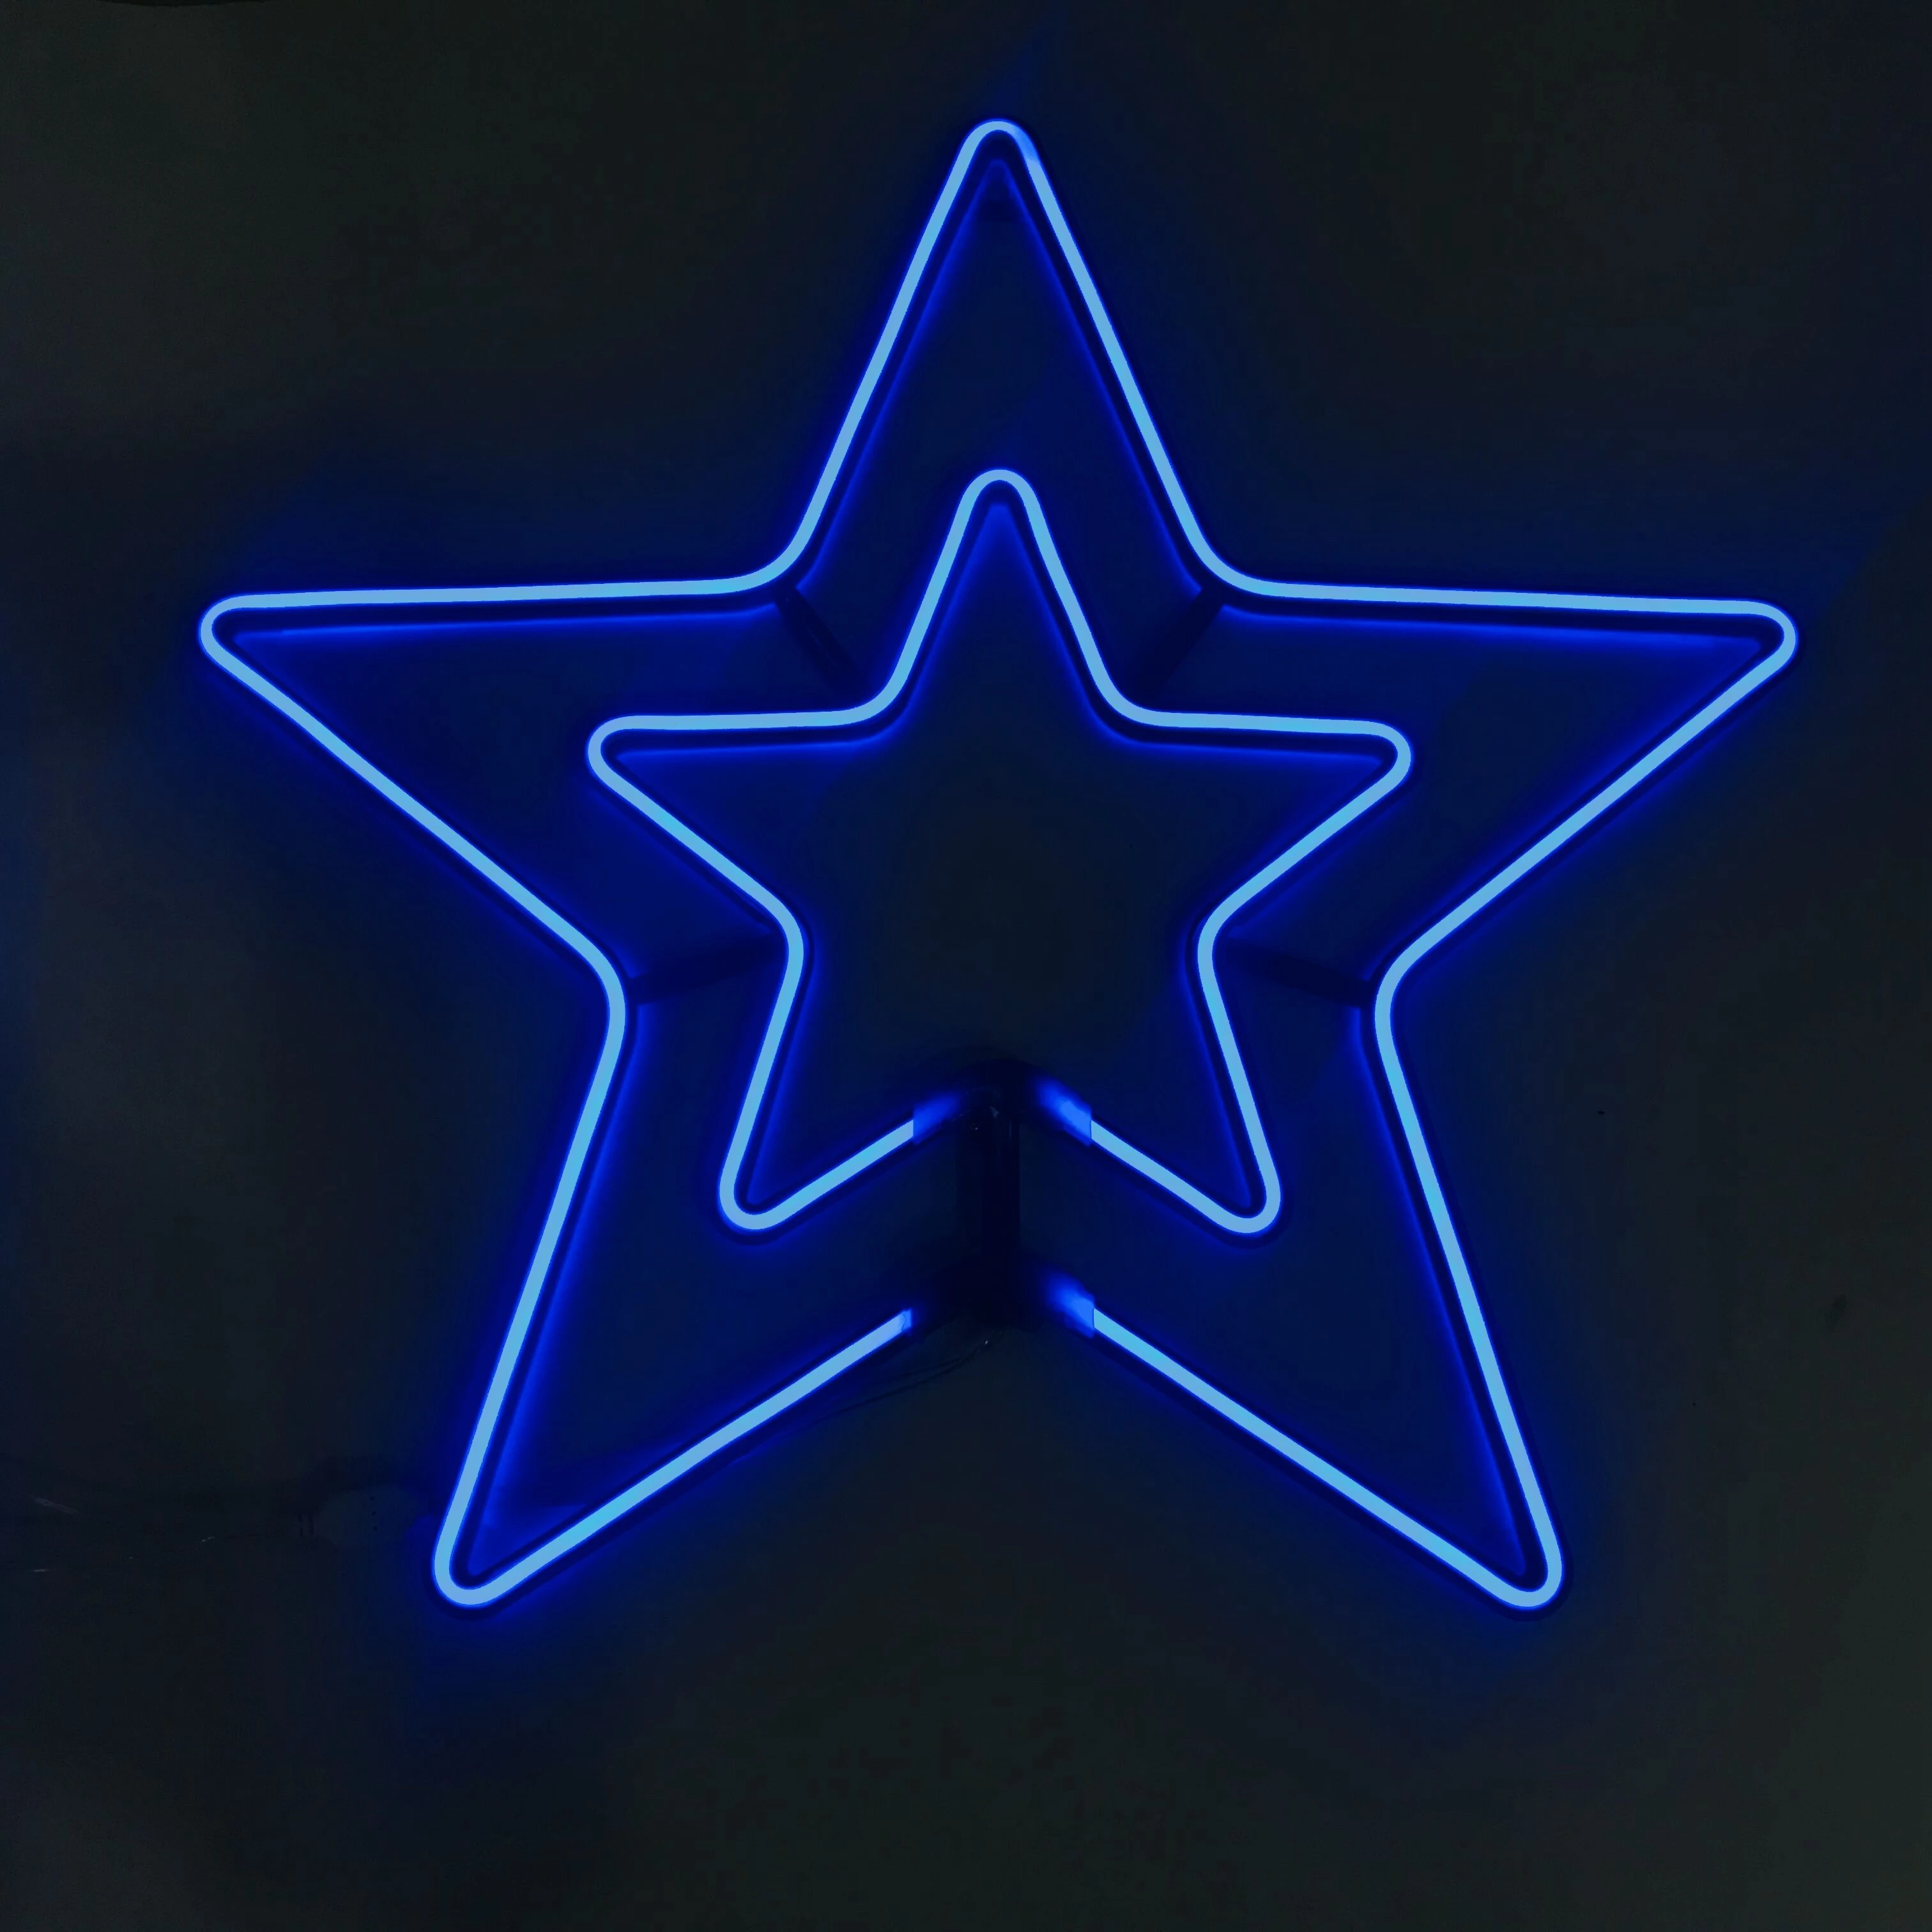 Custom USB Christmas LED Blue Star Neon Decorative Wall Lights For Home Xmas Party